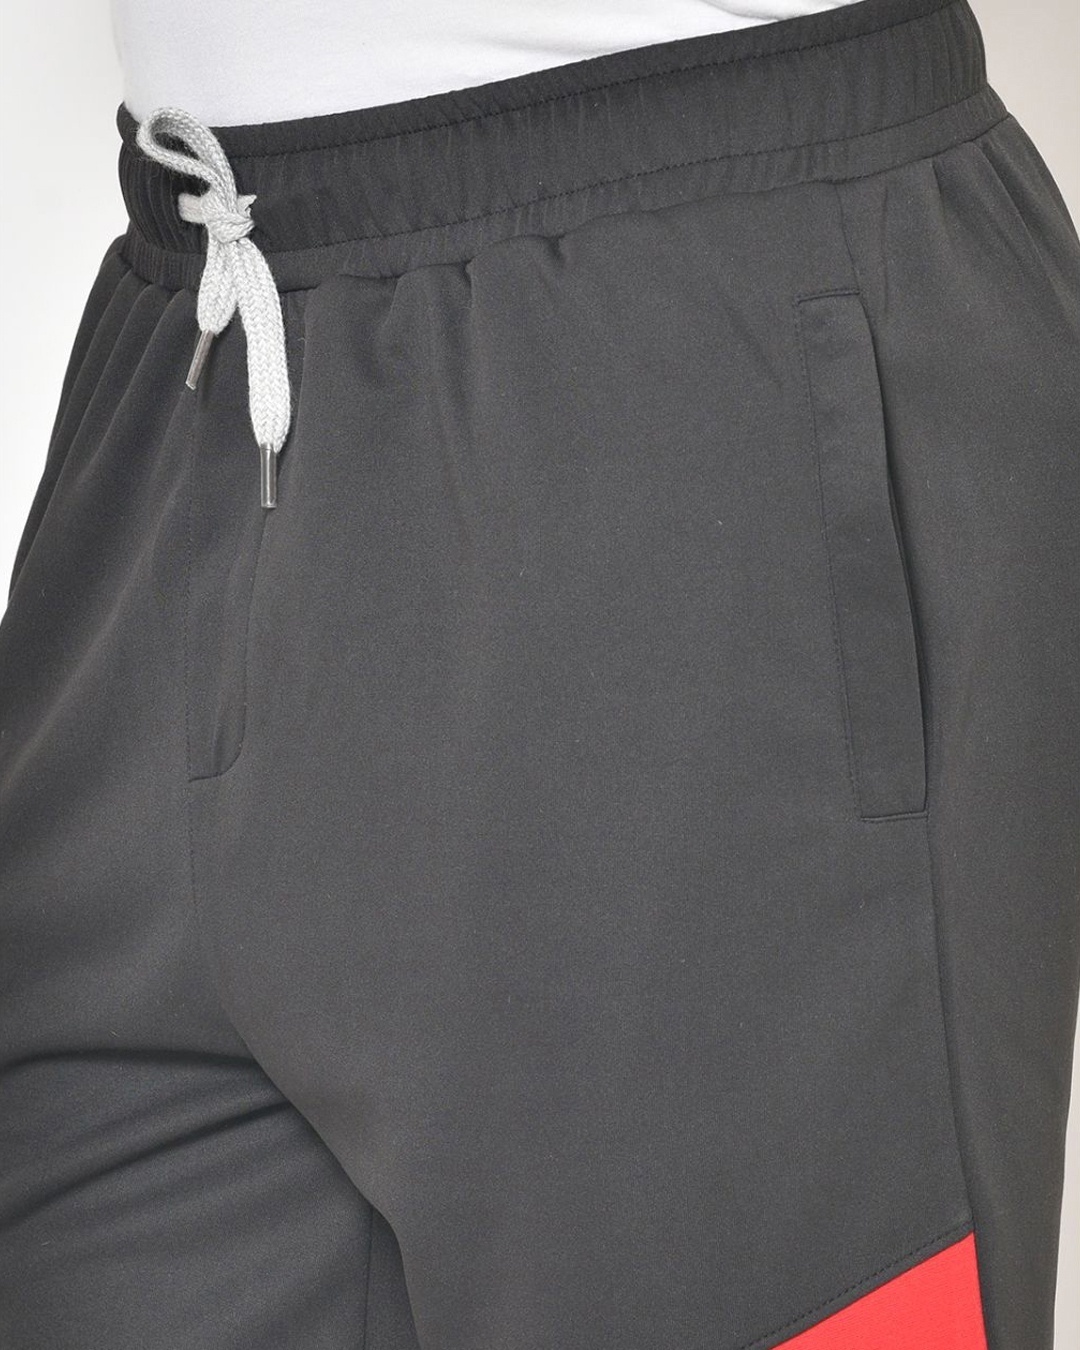 Shop Men's Black Color Block Shorts